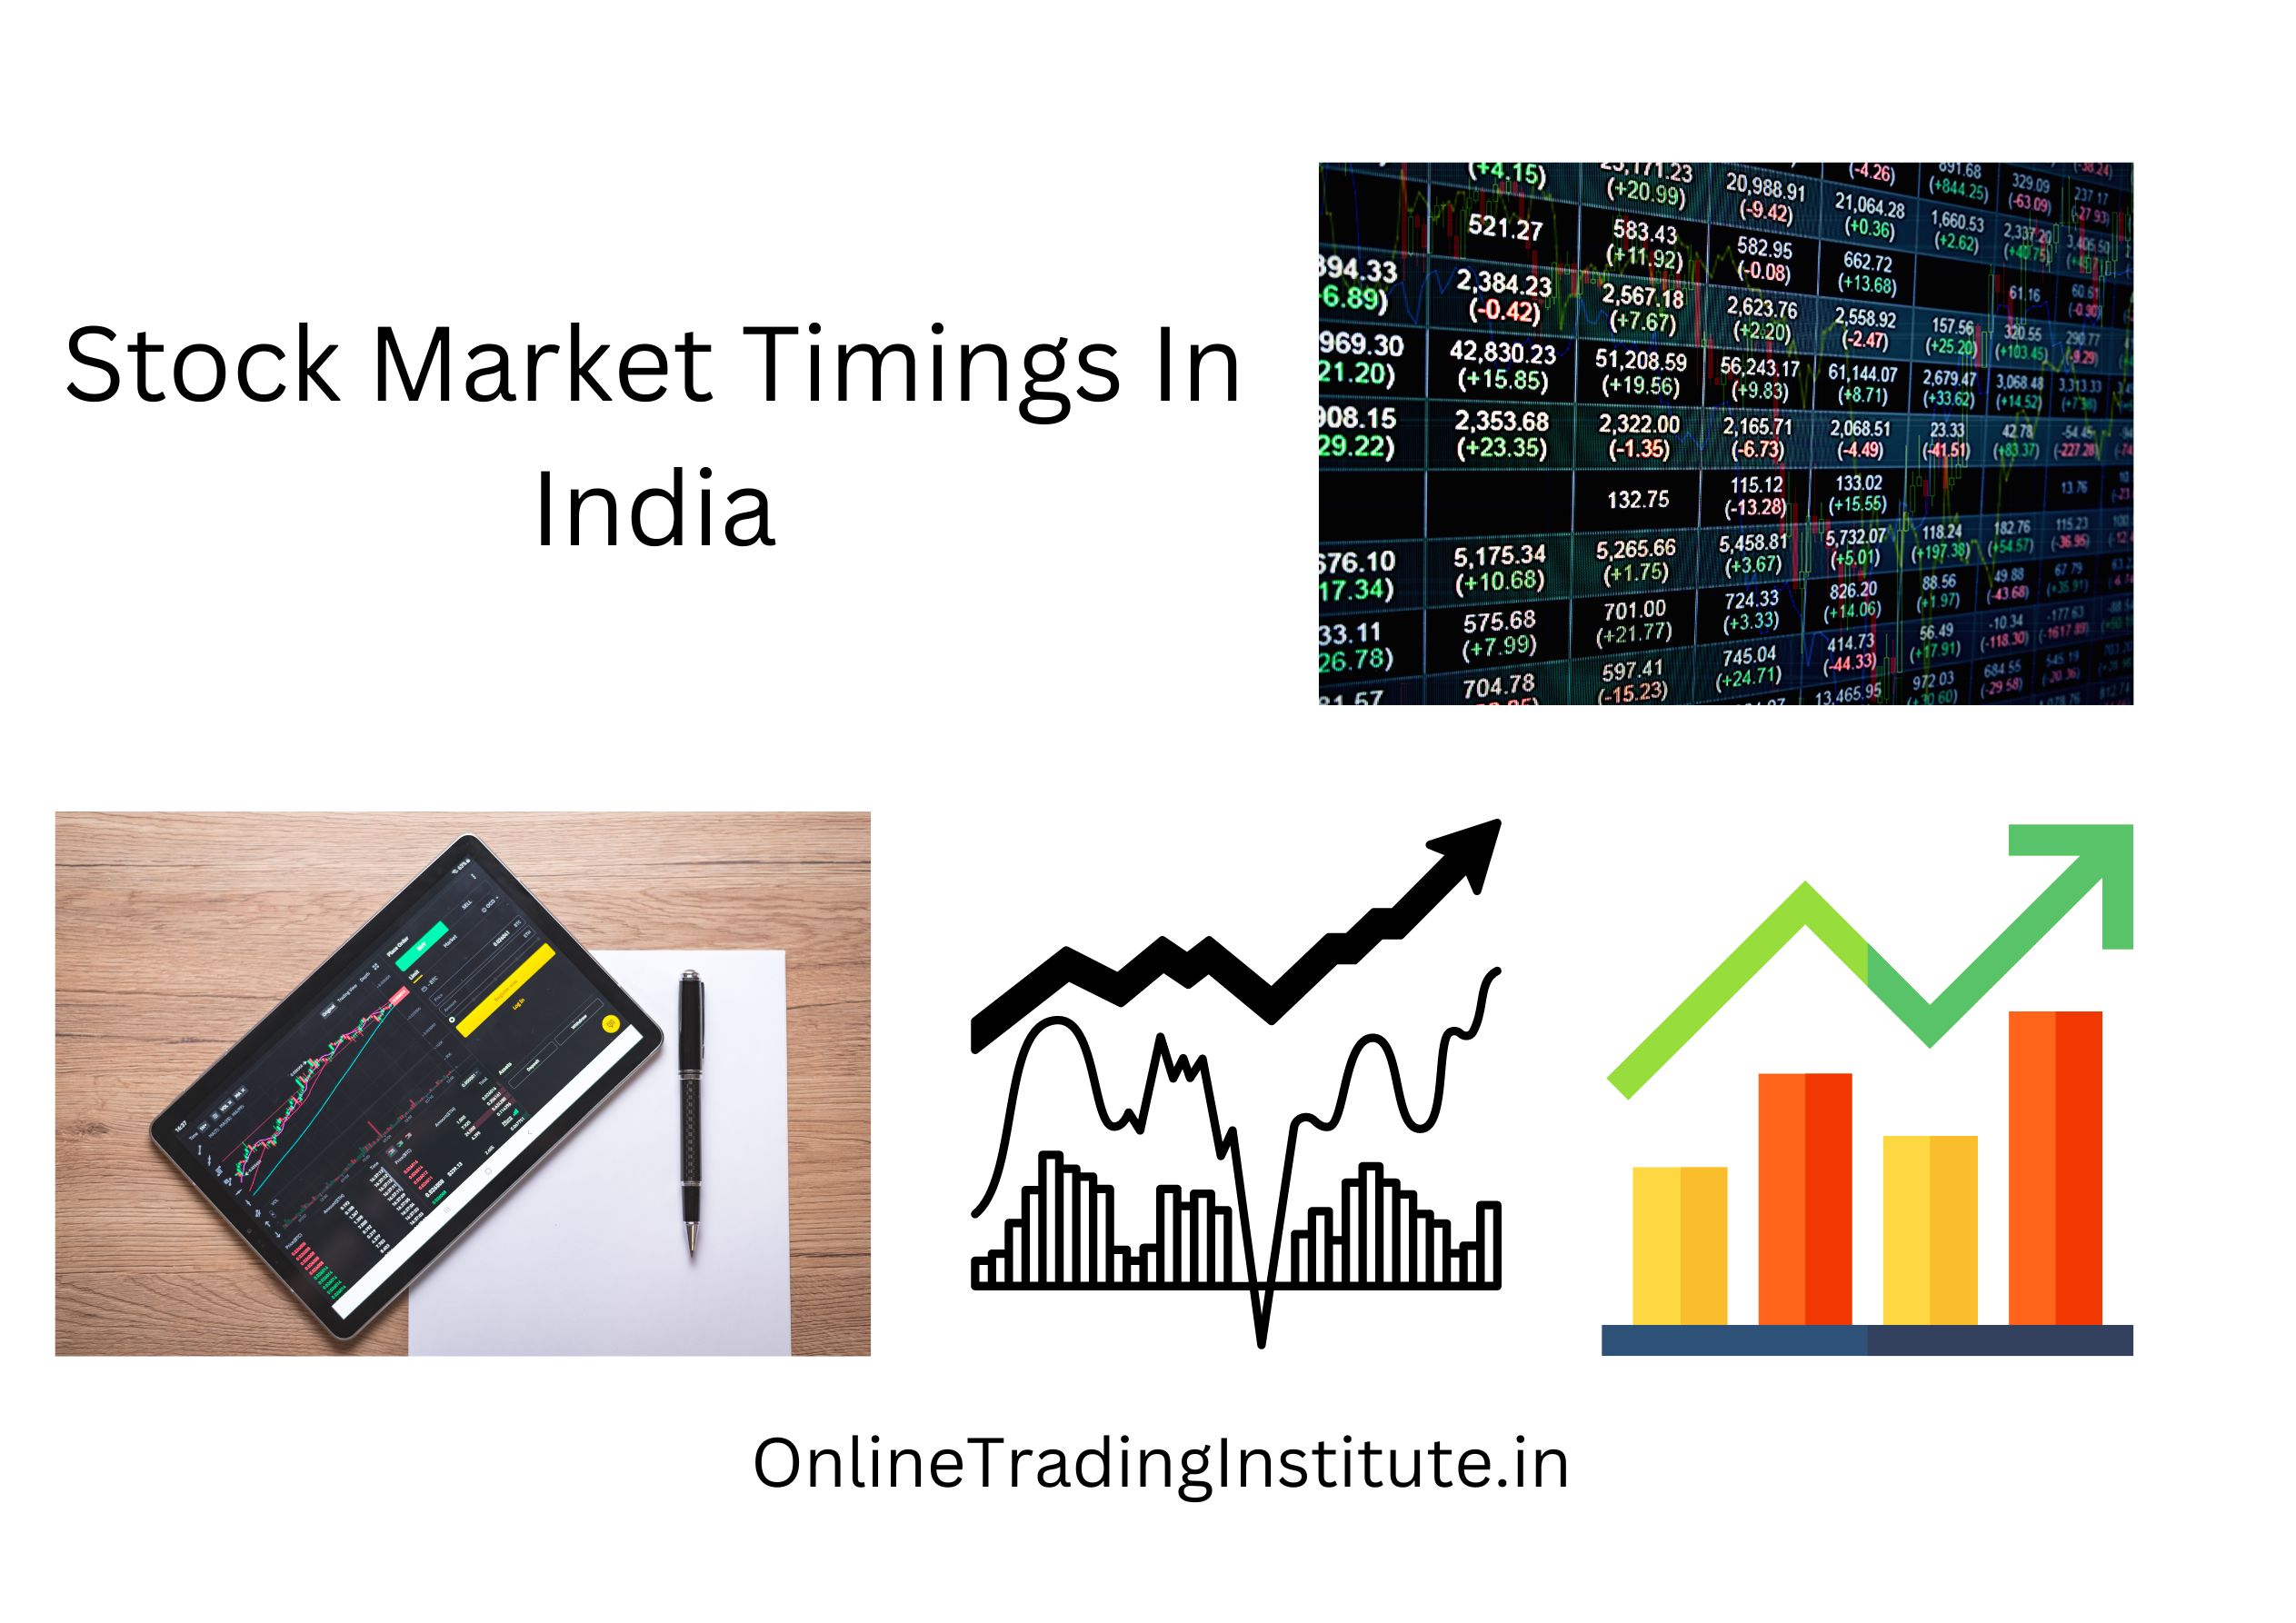 Indian stock market timings